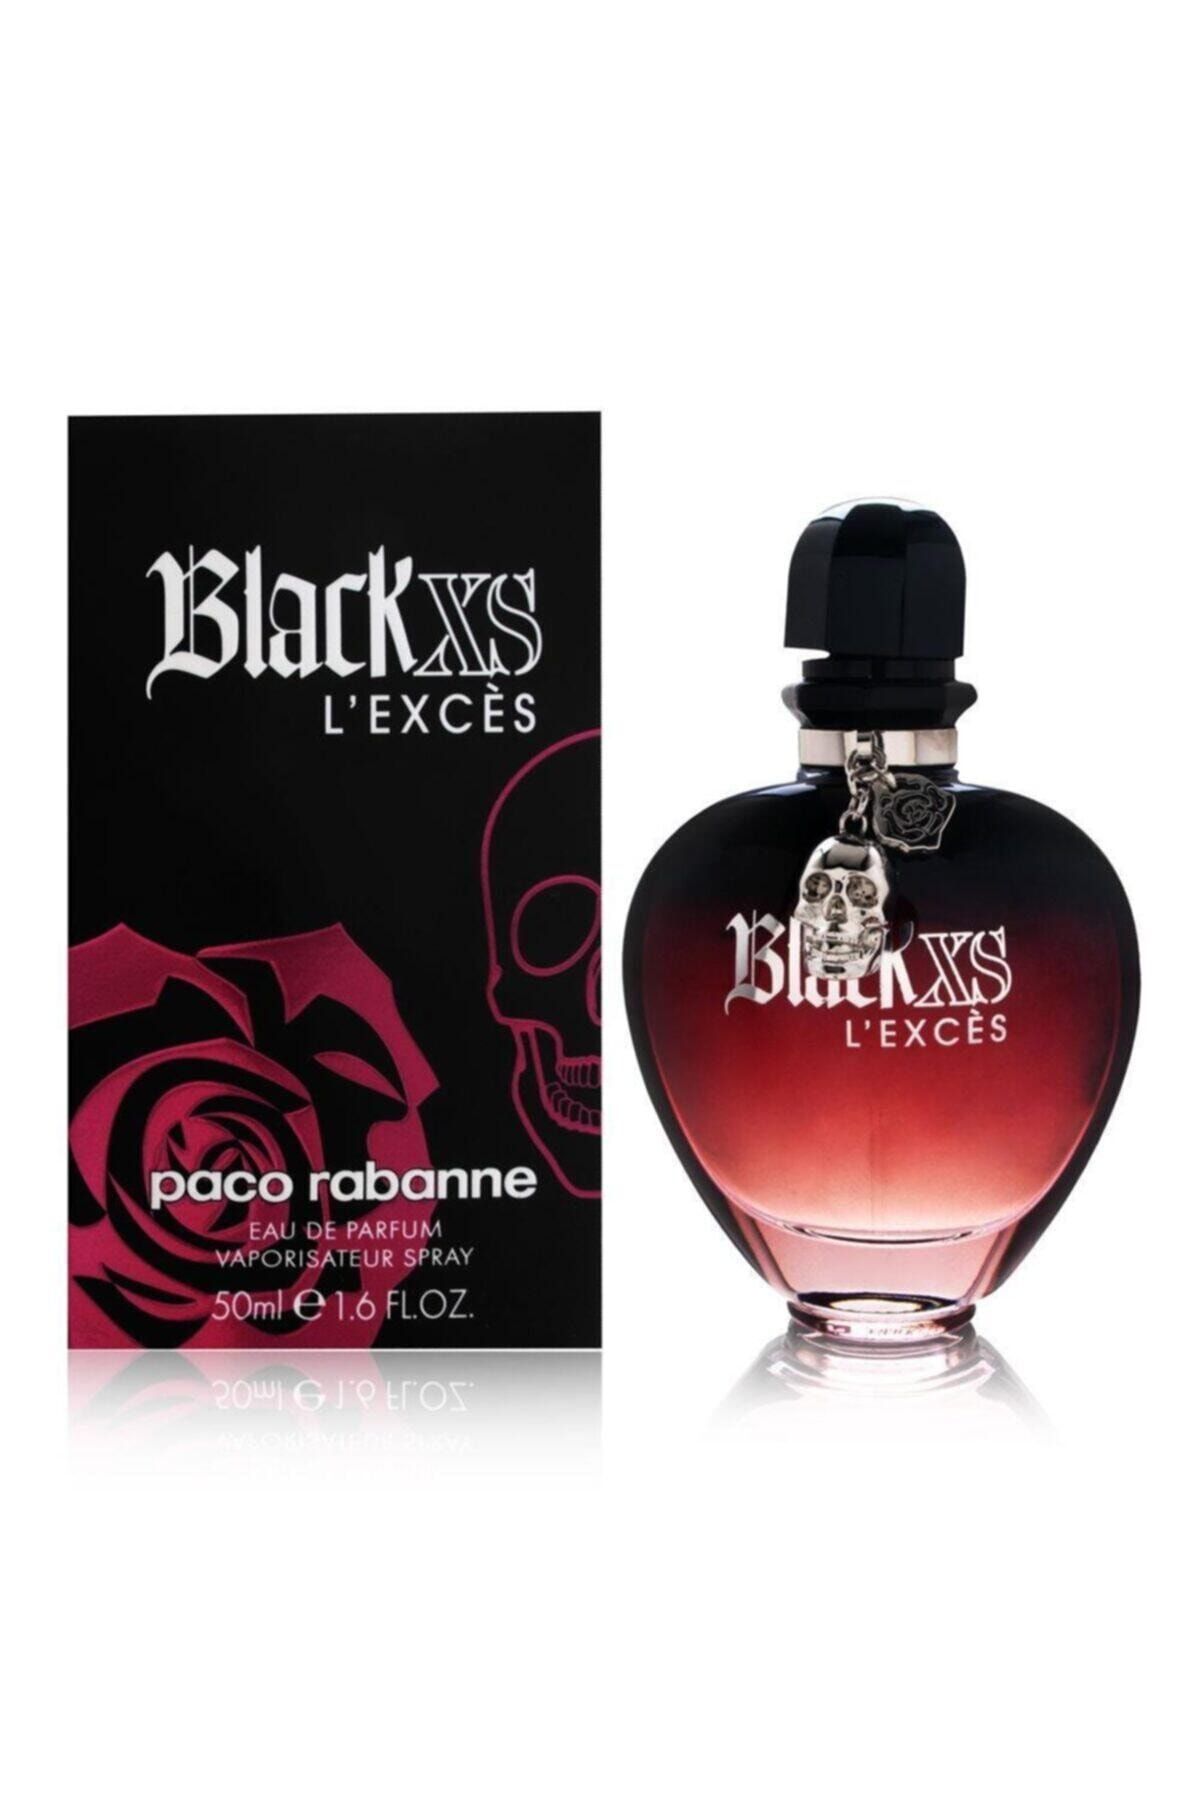 Пако рабан женские блэк. Paco Rabanne Black XS L'exces. Paco Rabanne Black XS L'exces for her 50 ml. Paco Rabanne Black XS 80ml. Paco Rabanne Black XS L'exces for her.